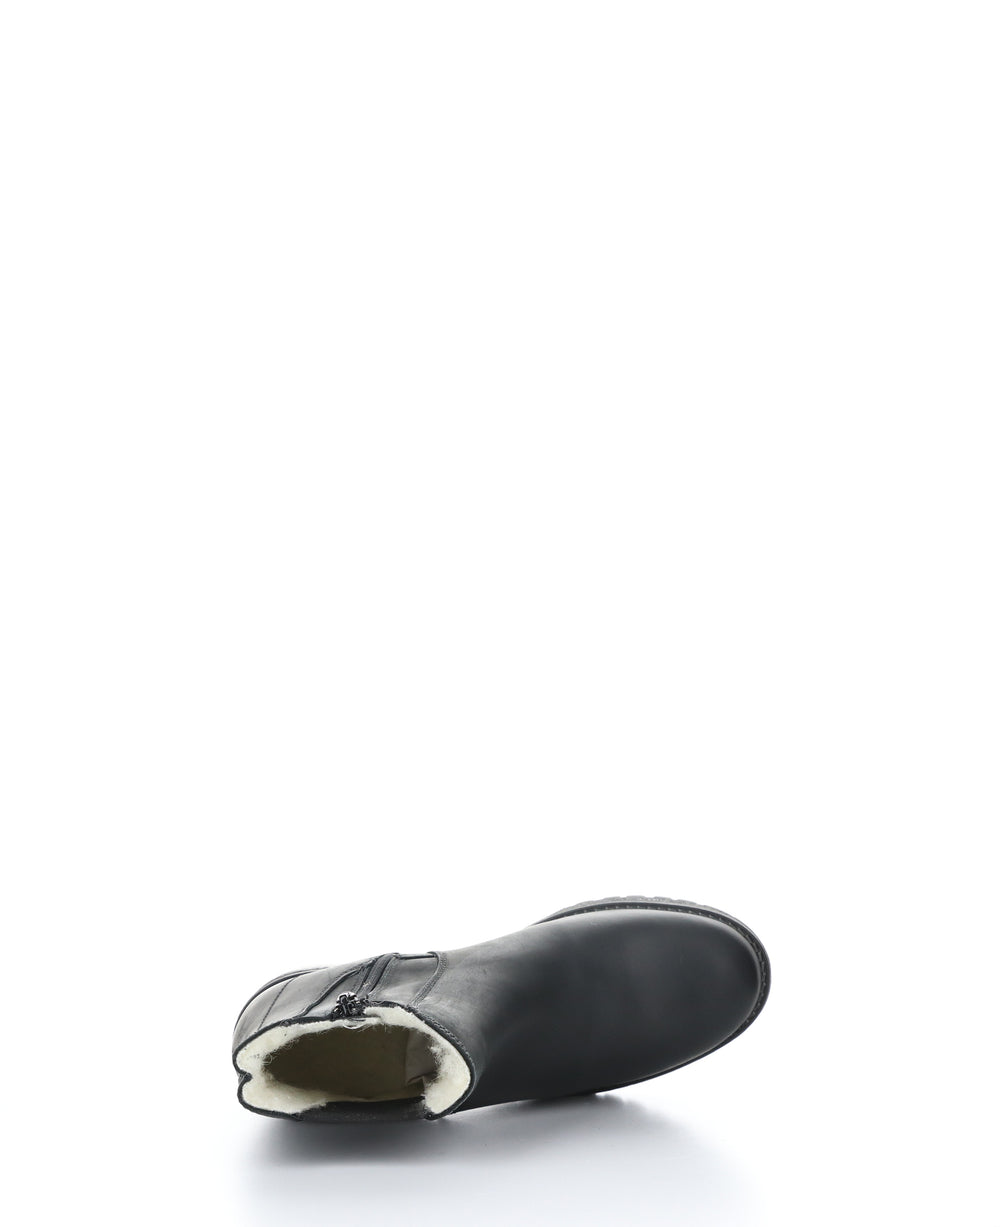 MASI Black Zip Up Ankle Boots|MASI Bottines avec Fermeture Zippée in Noir